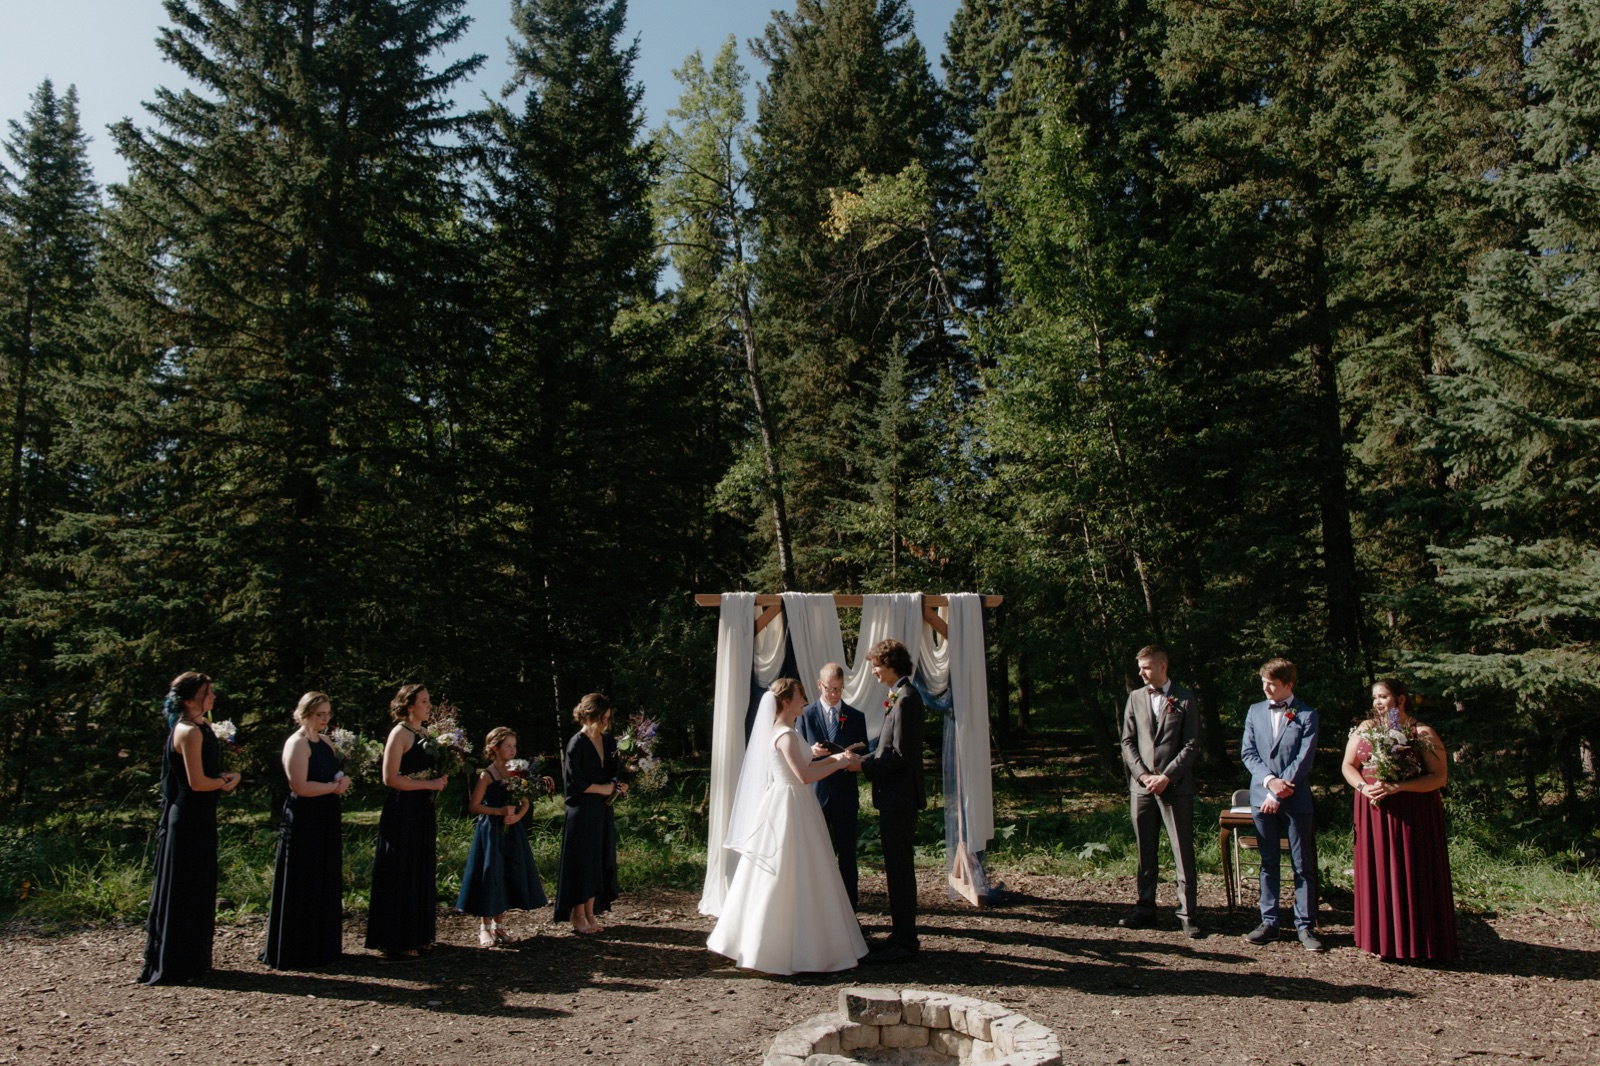 Camp Cadicasu wedding ceremony near Sibbald Creek